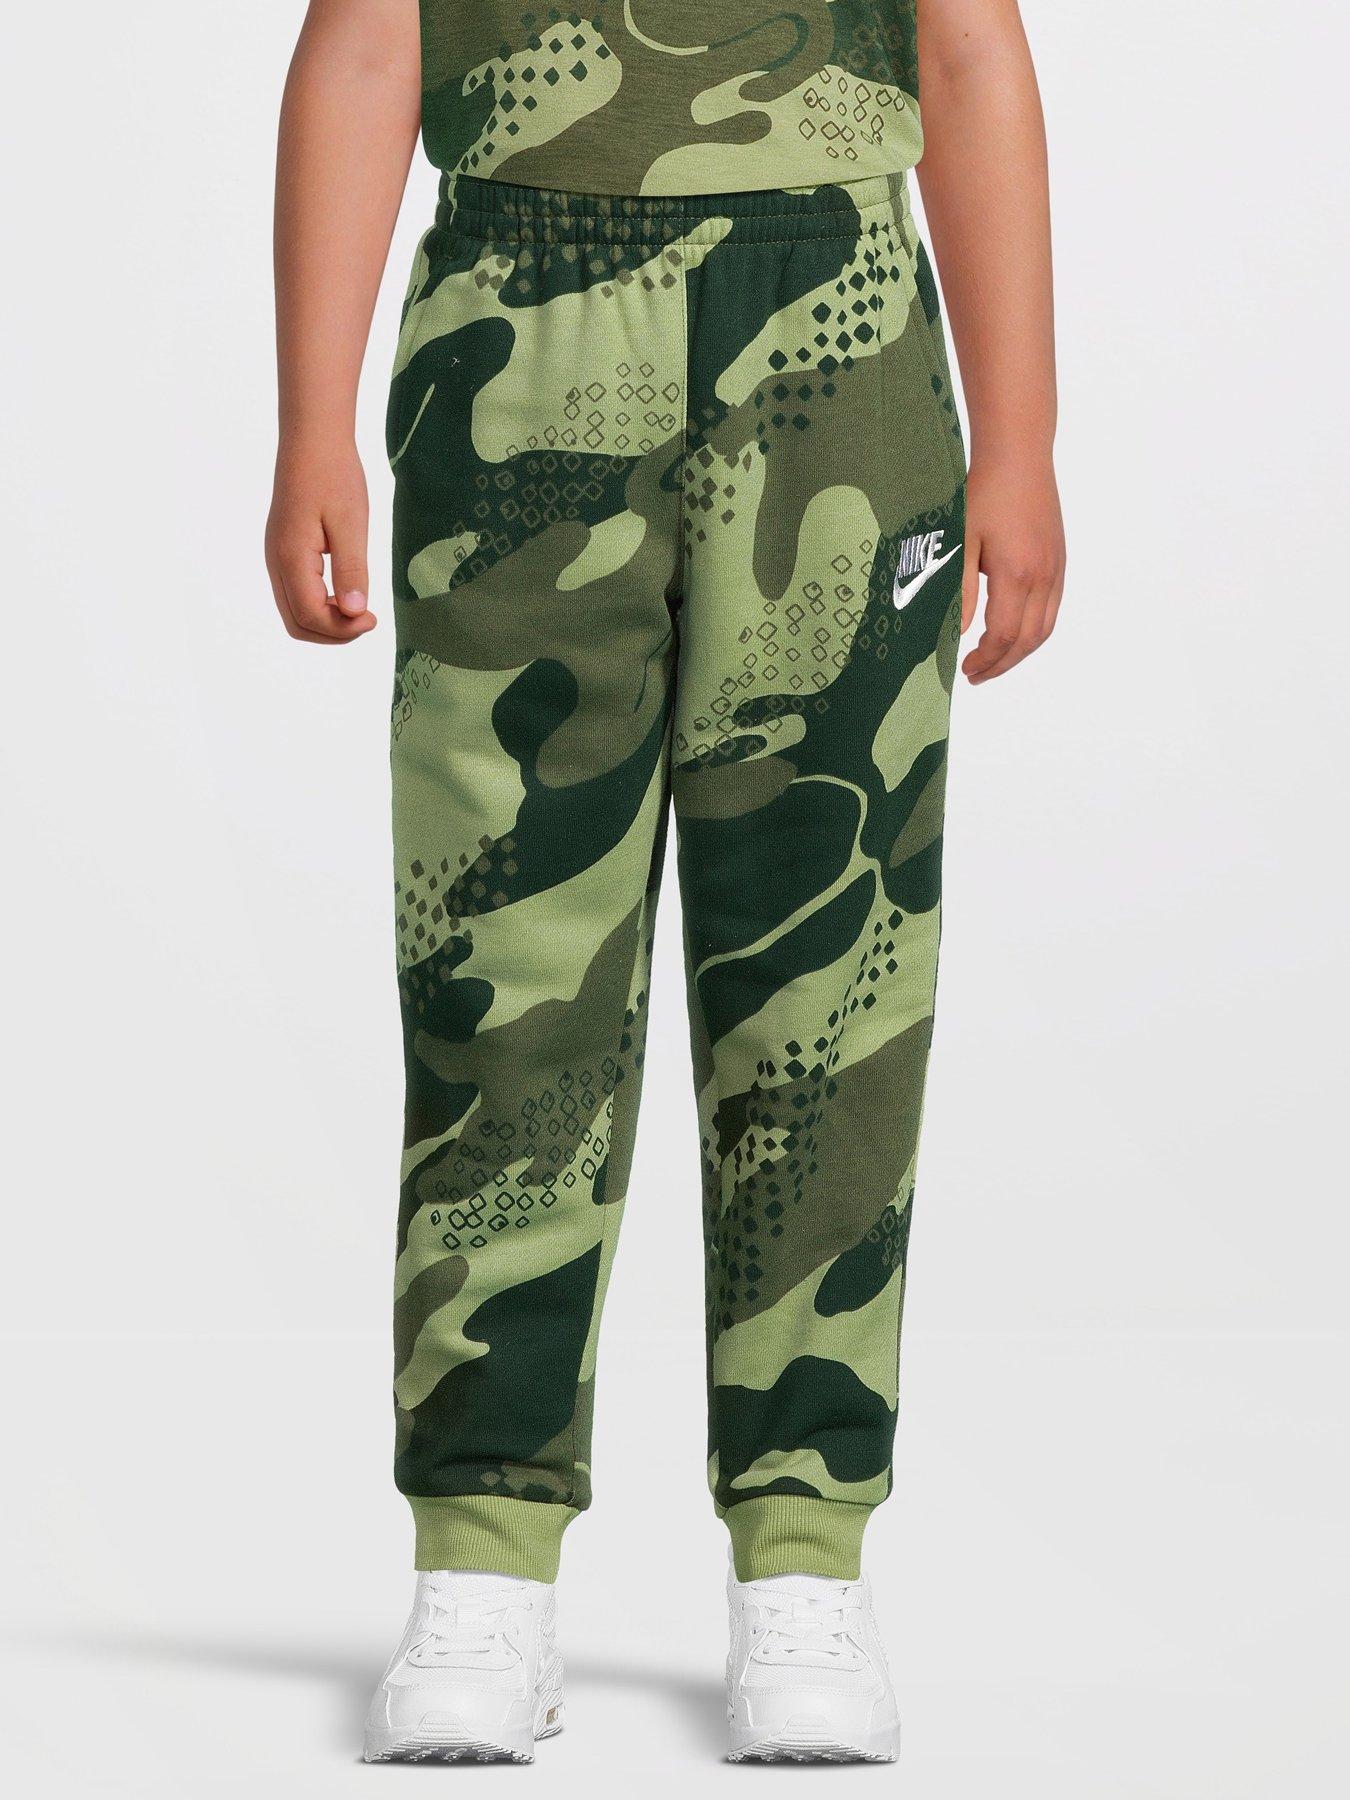 Nike logo grey tone tonal camo camouflage high waisted stretchy gym leggings  S